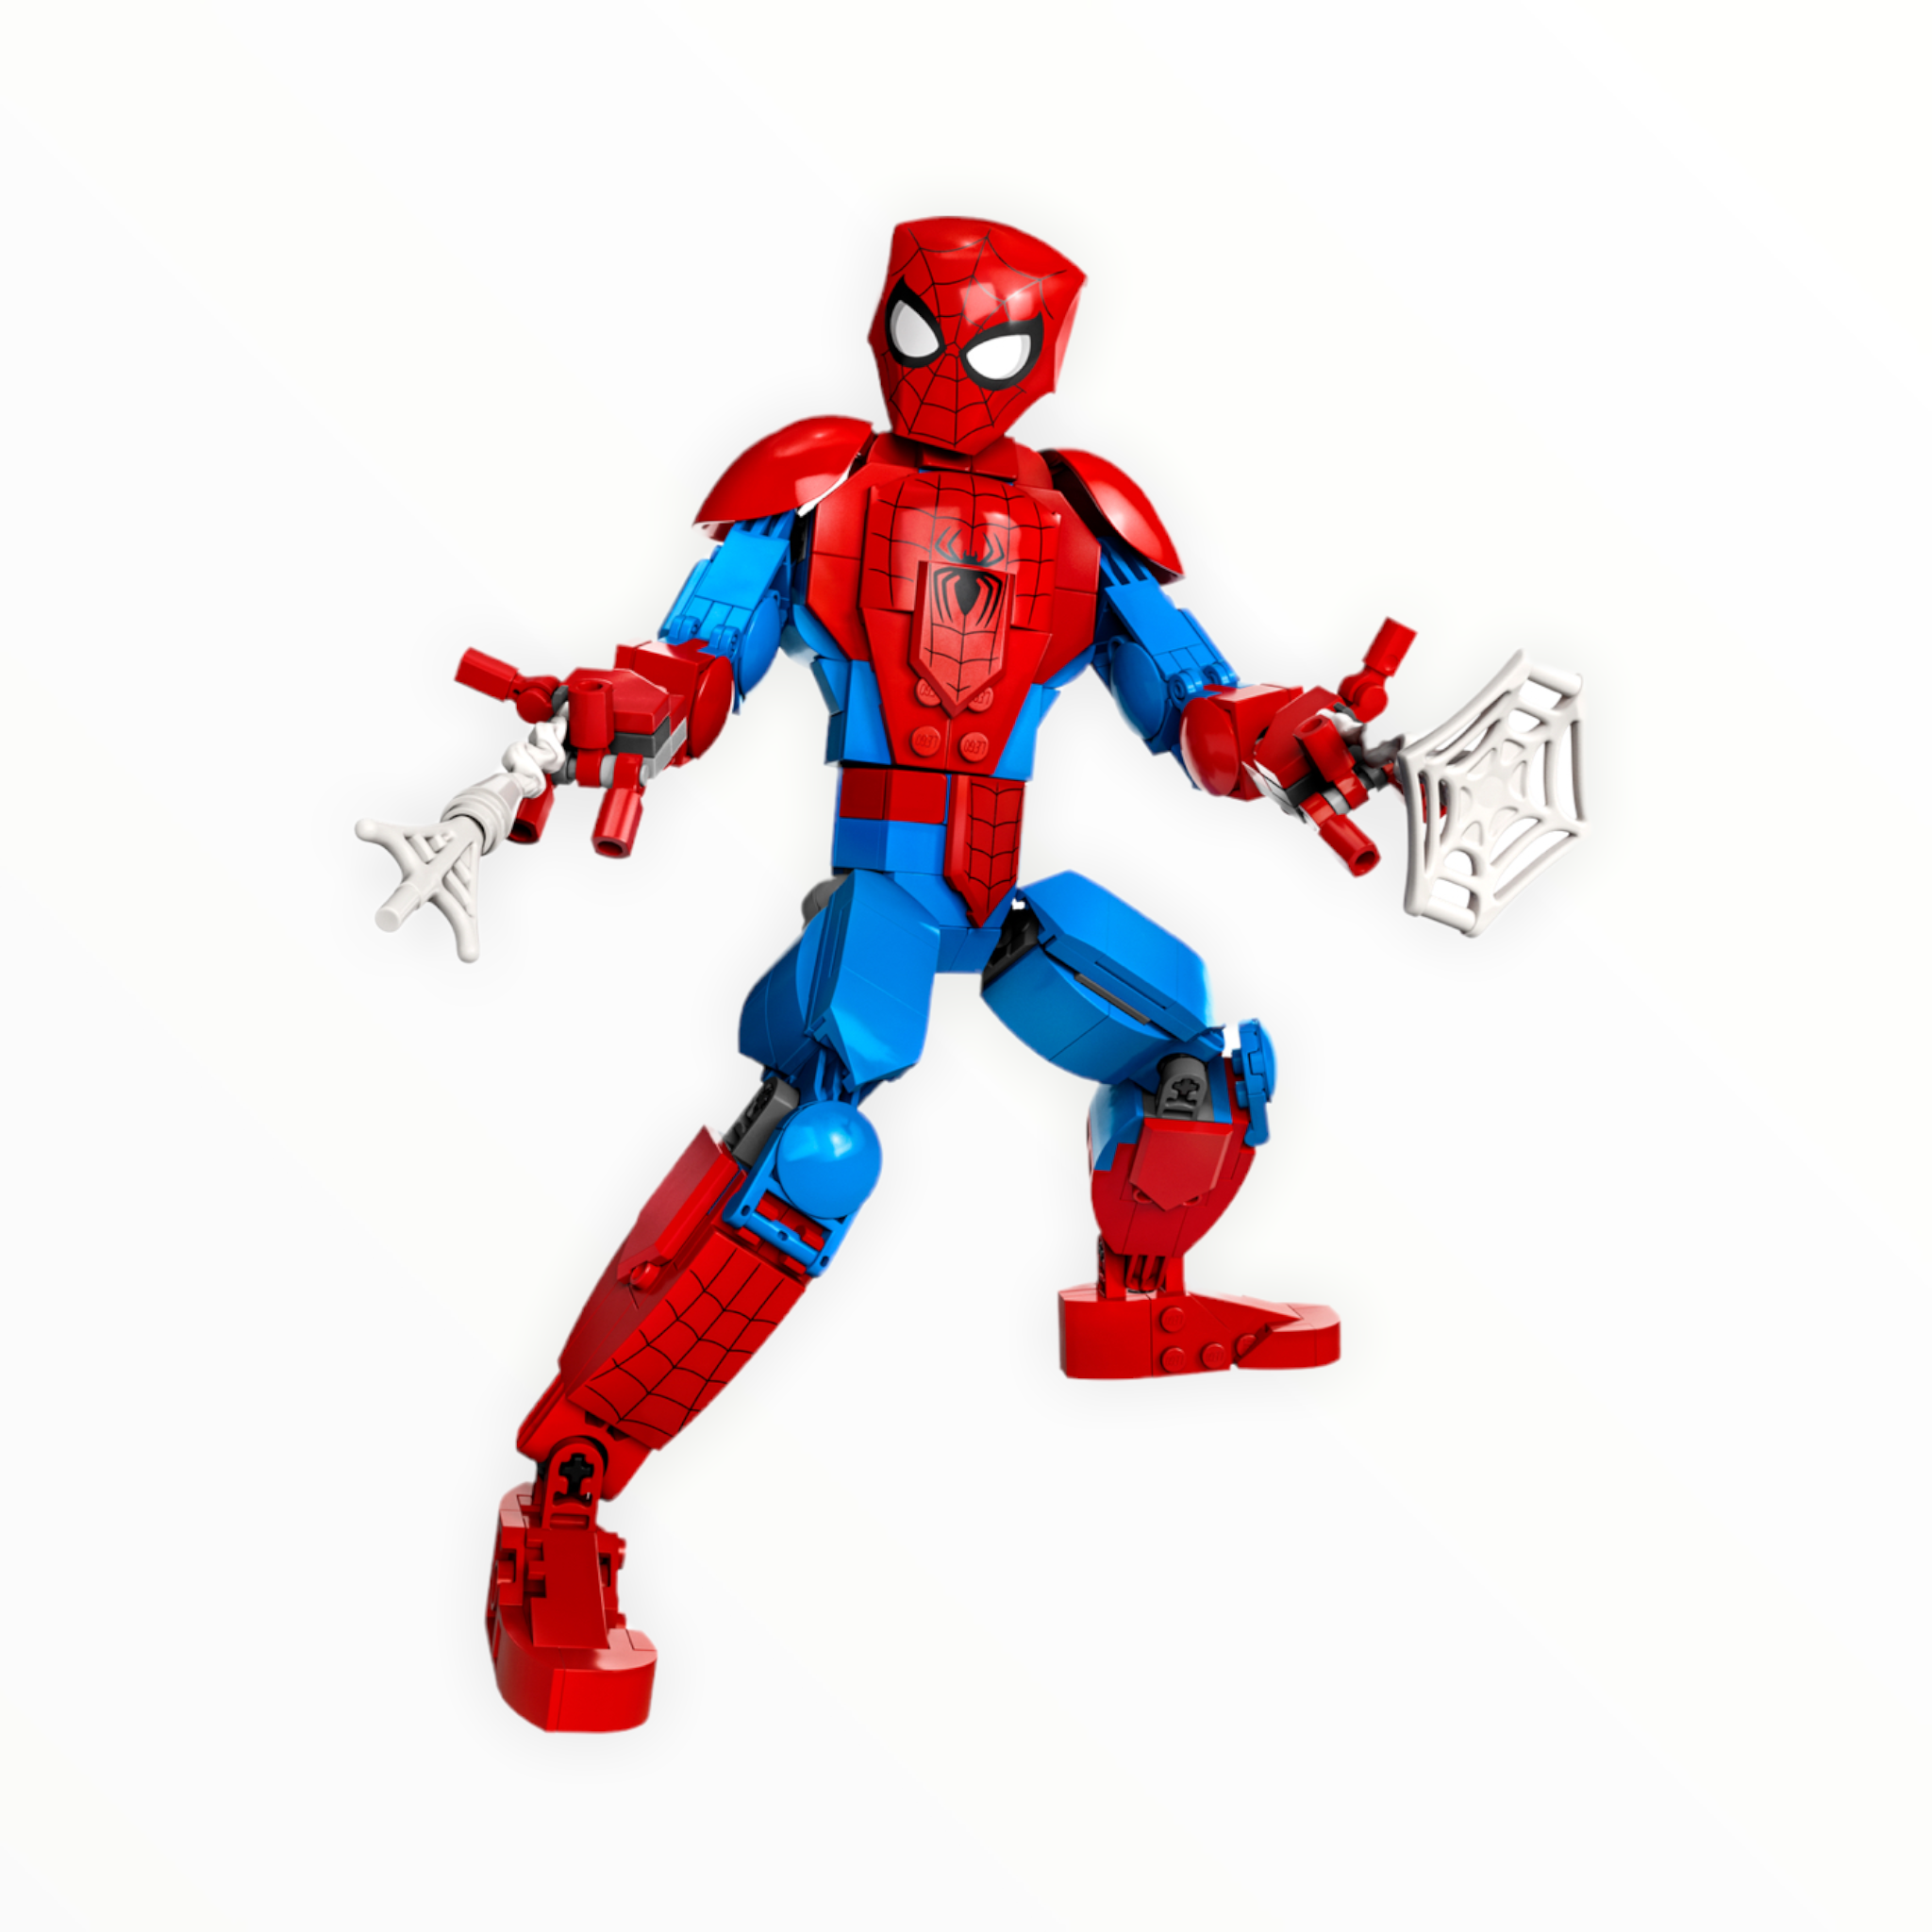 76226 Marvel Spider-Man Figure